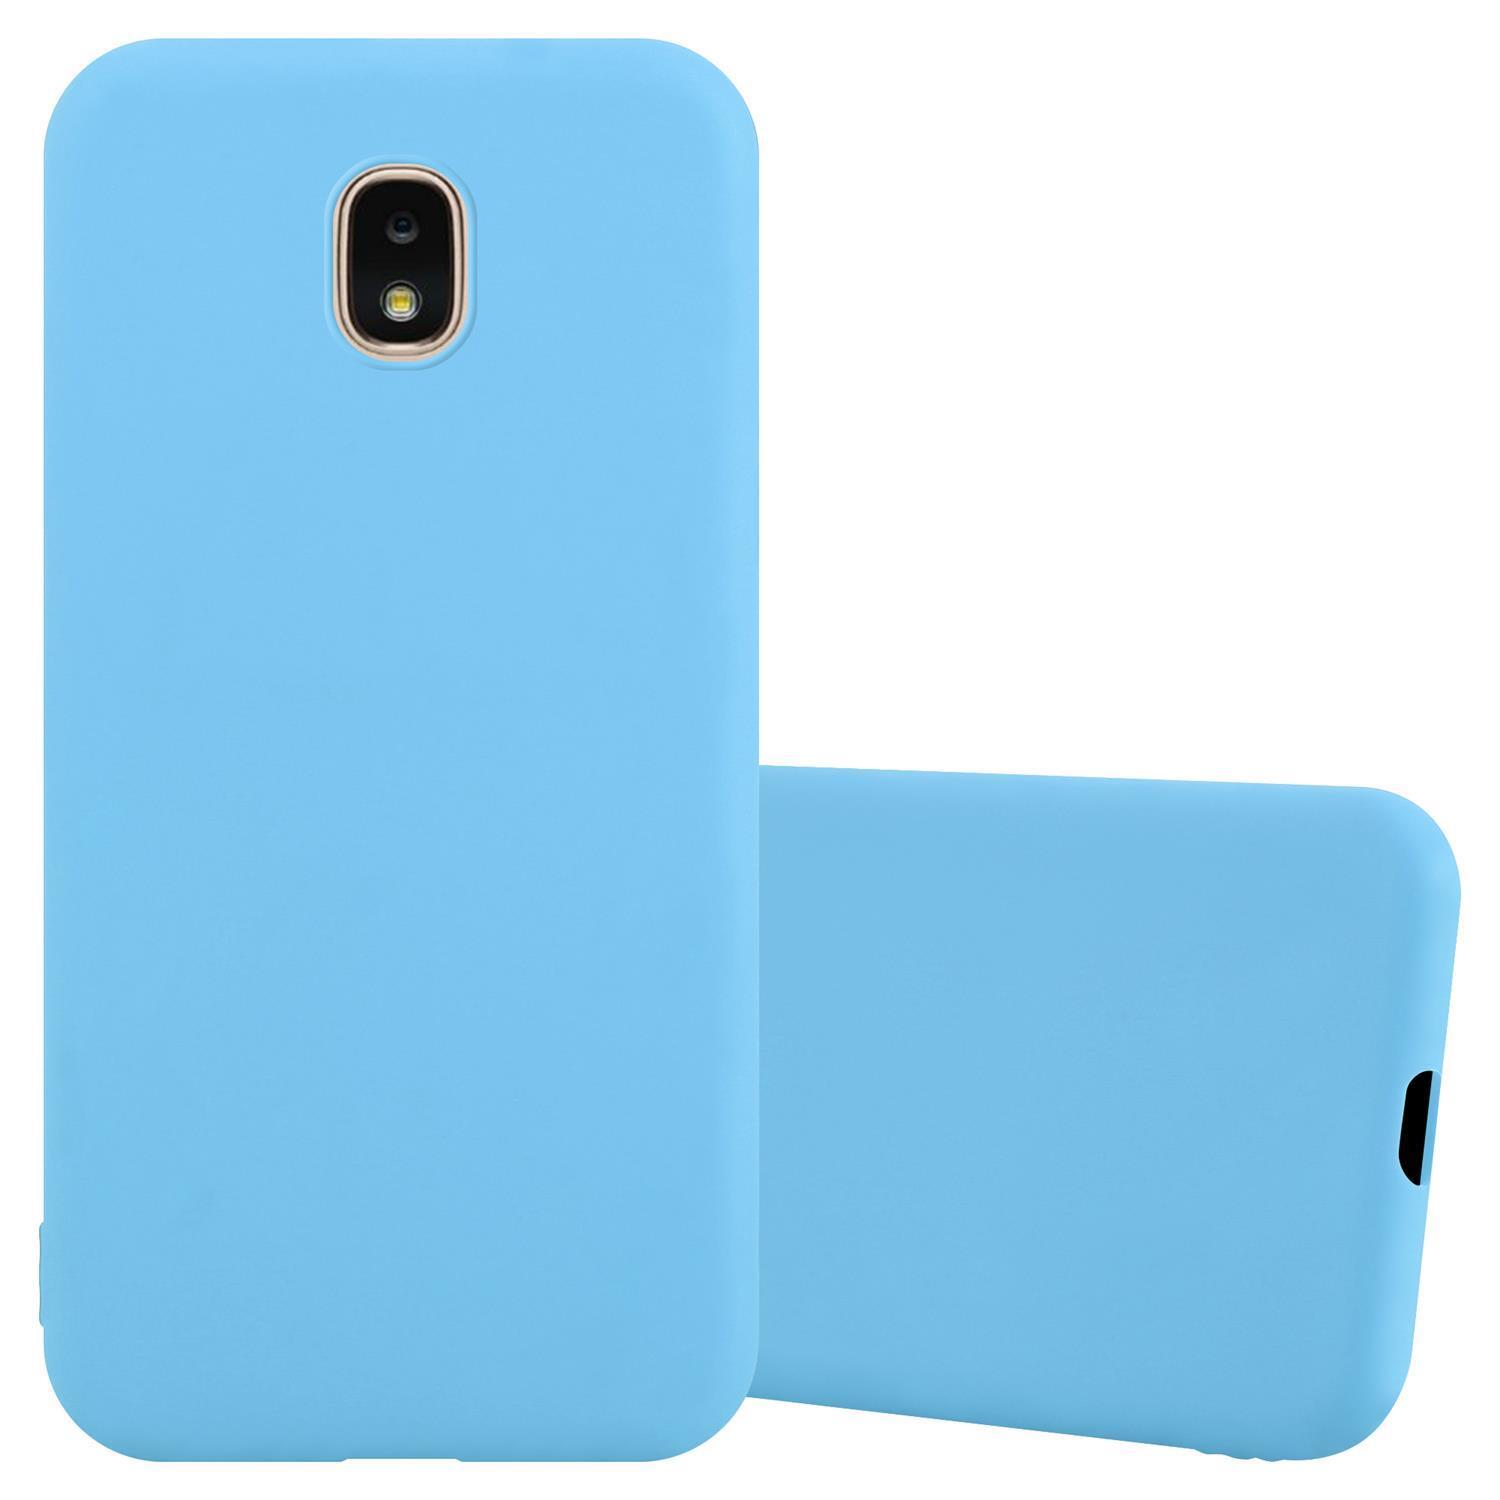 Samsung Galaxy J3 2018 silikondeksel cover (blå) - Elkjøp